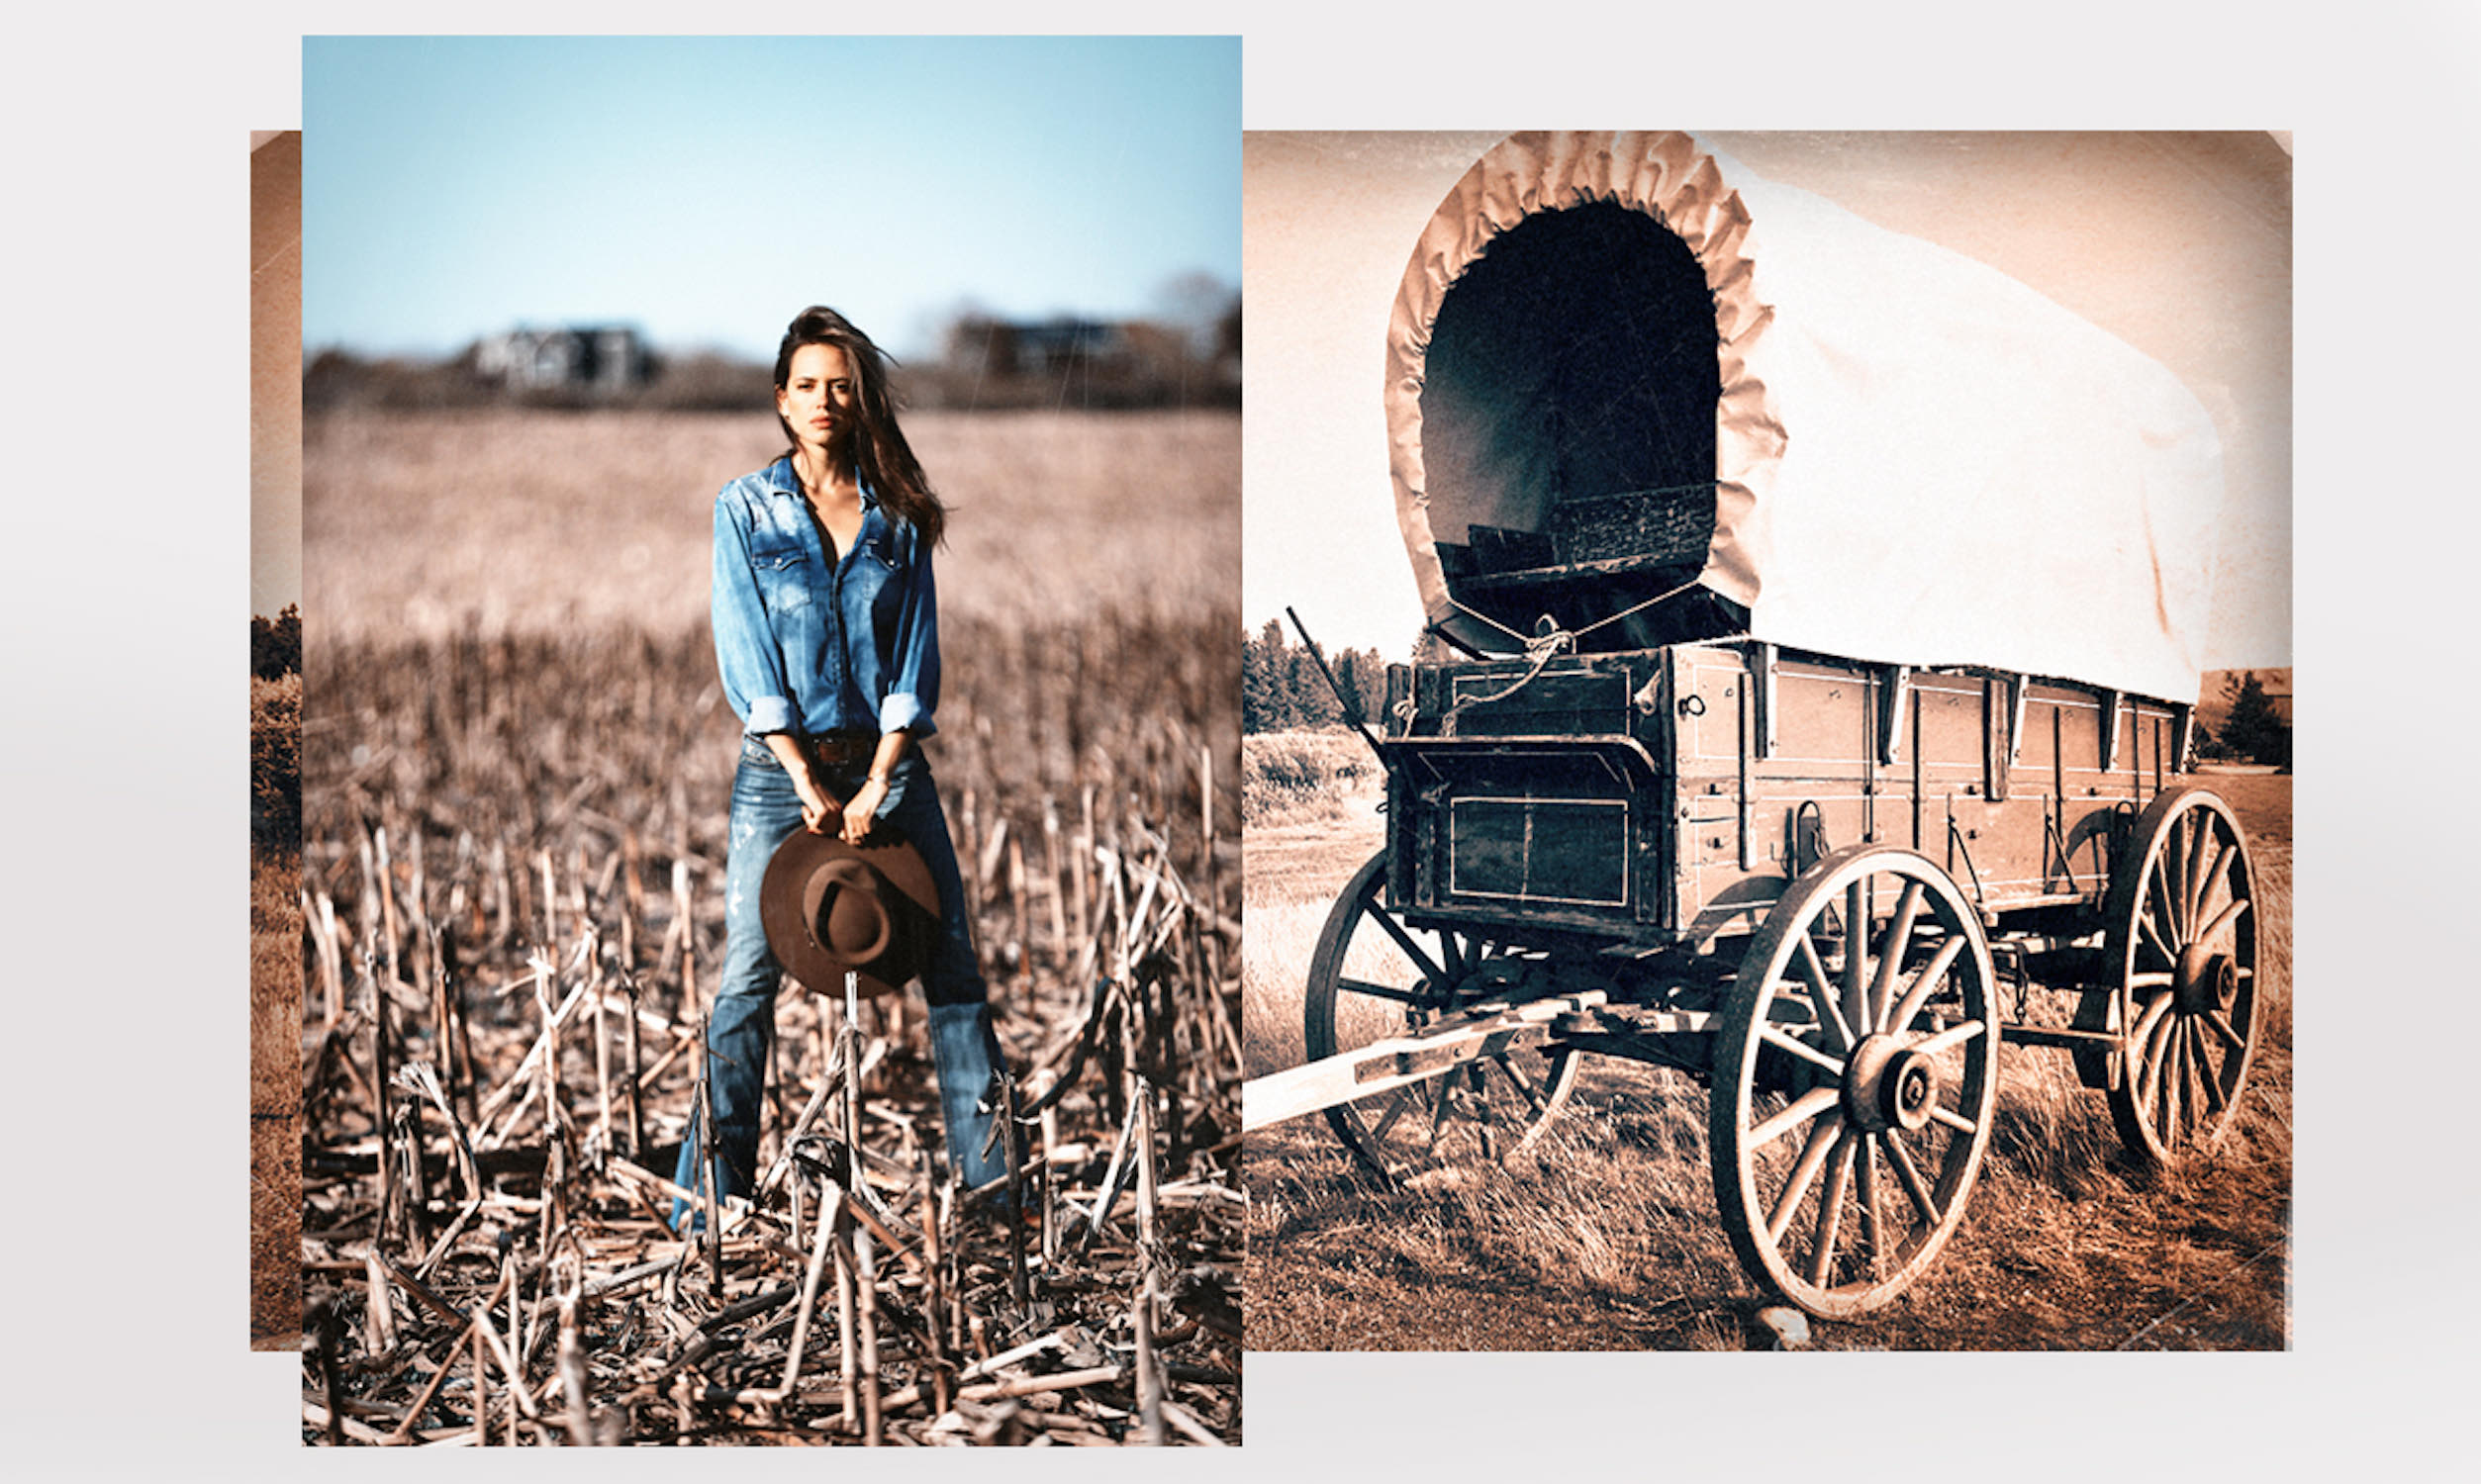 Vintage american western wagon, sepia vintage process, West American cowboy times concept